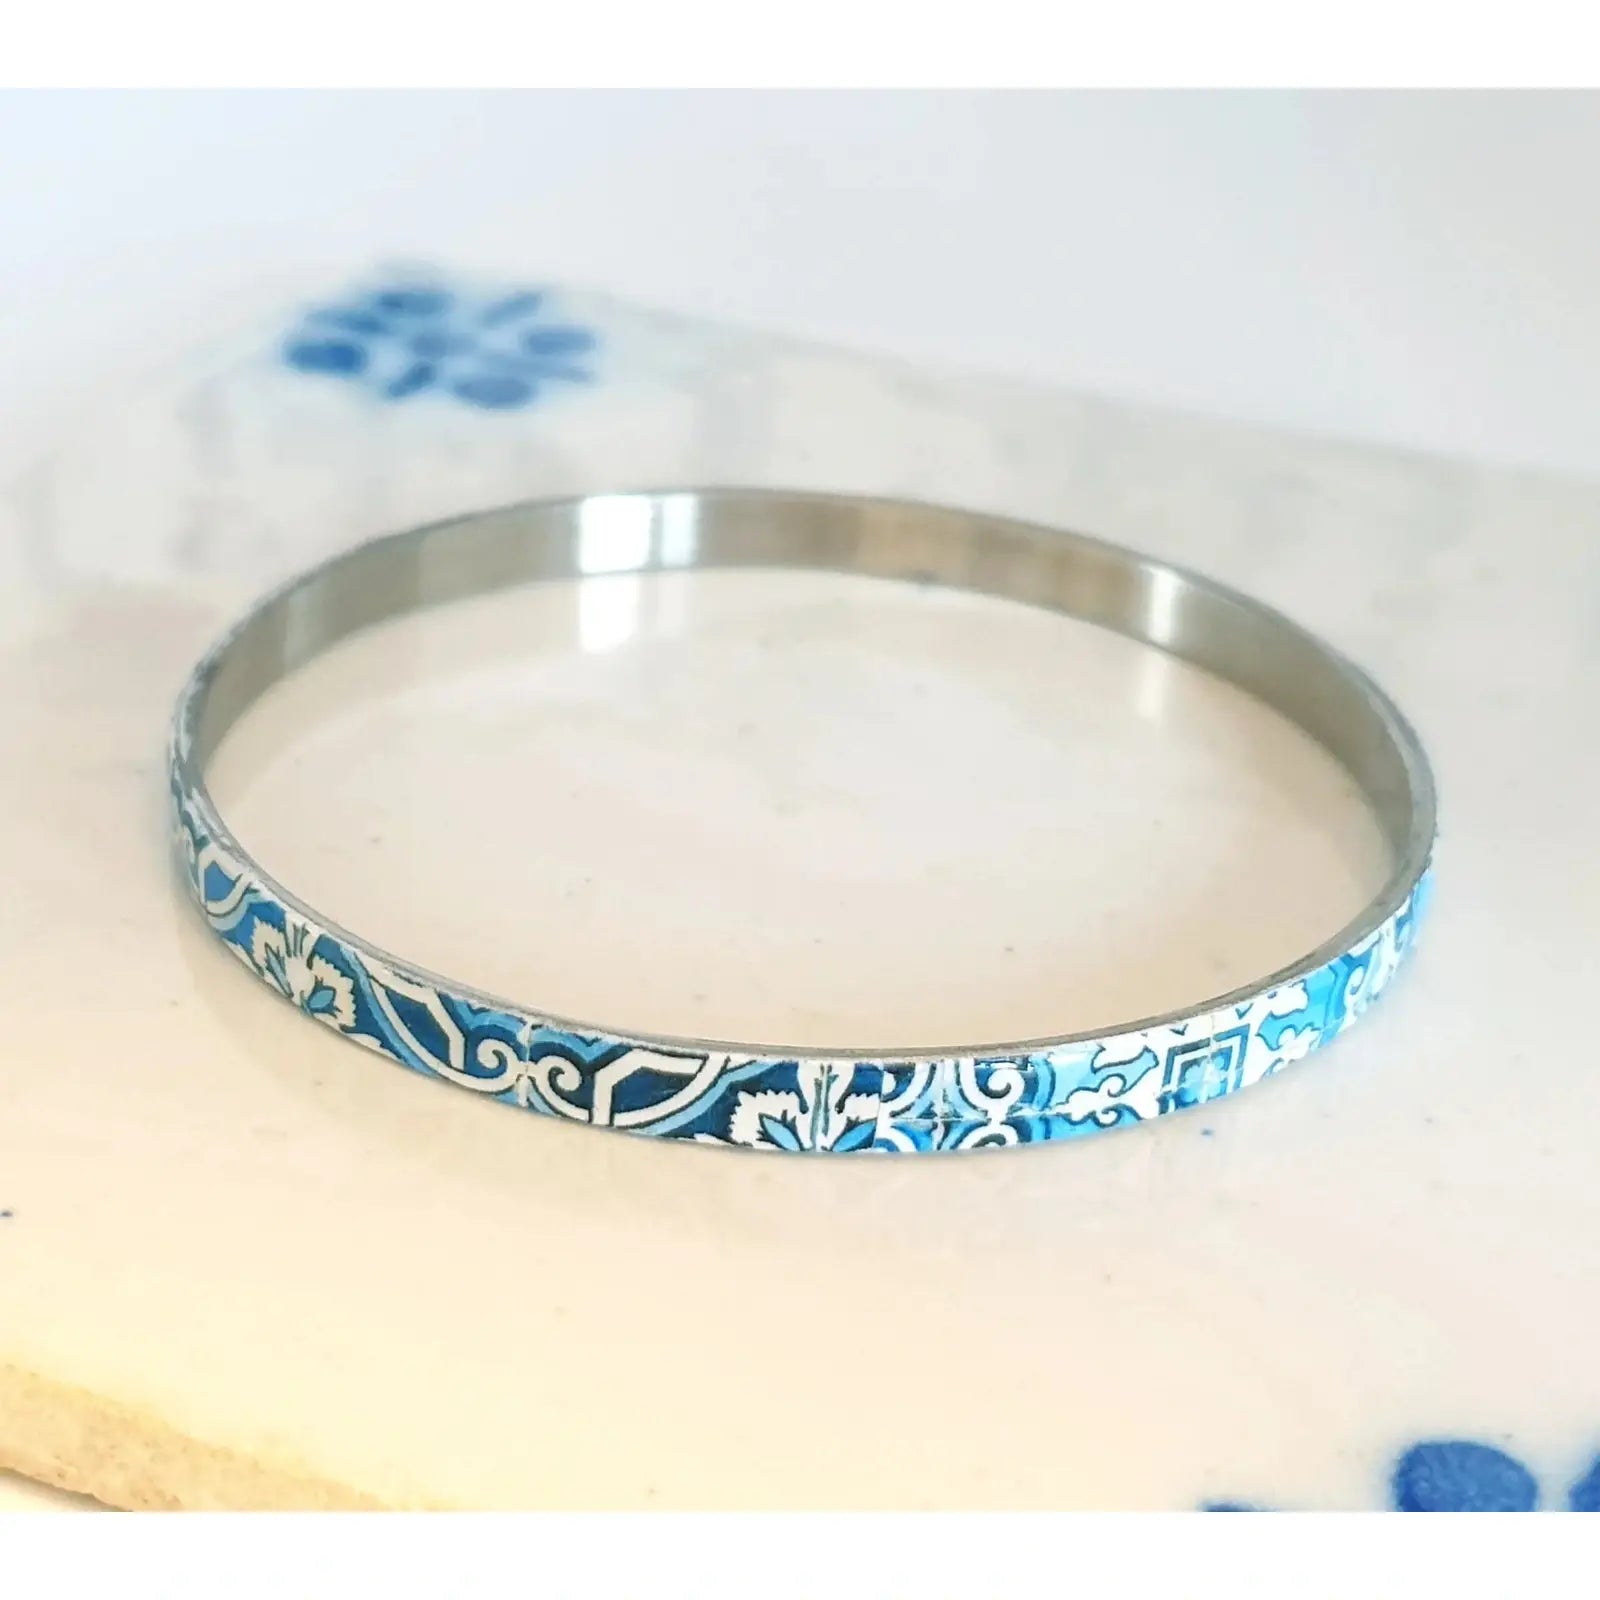 Christine- Portuguese tile bangle bracelet